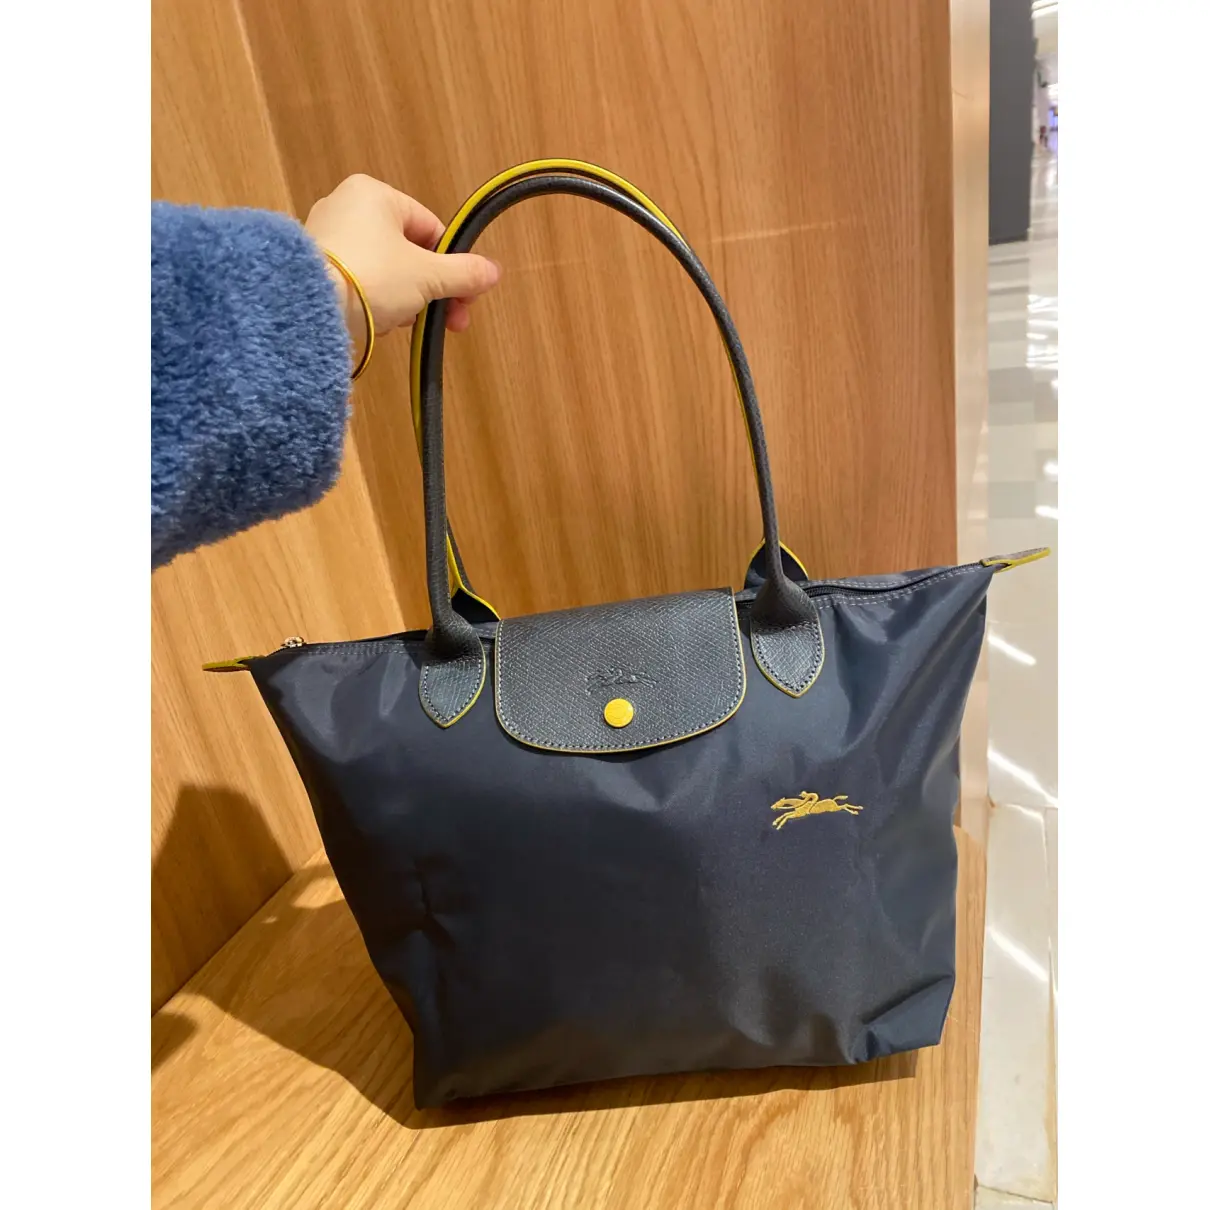 Buy Longchamp Cavalcade handbag online